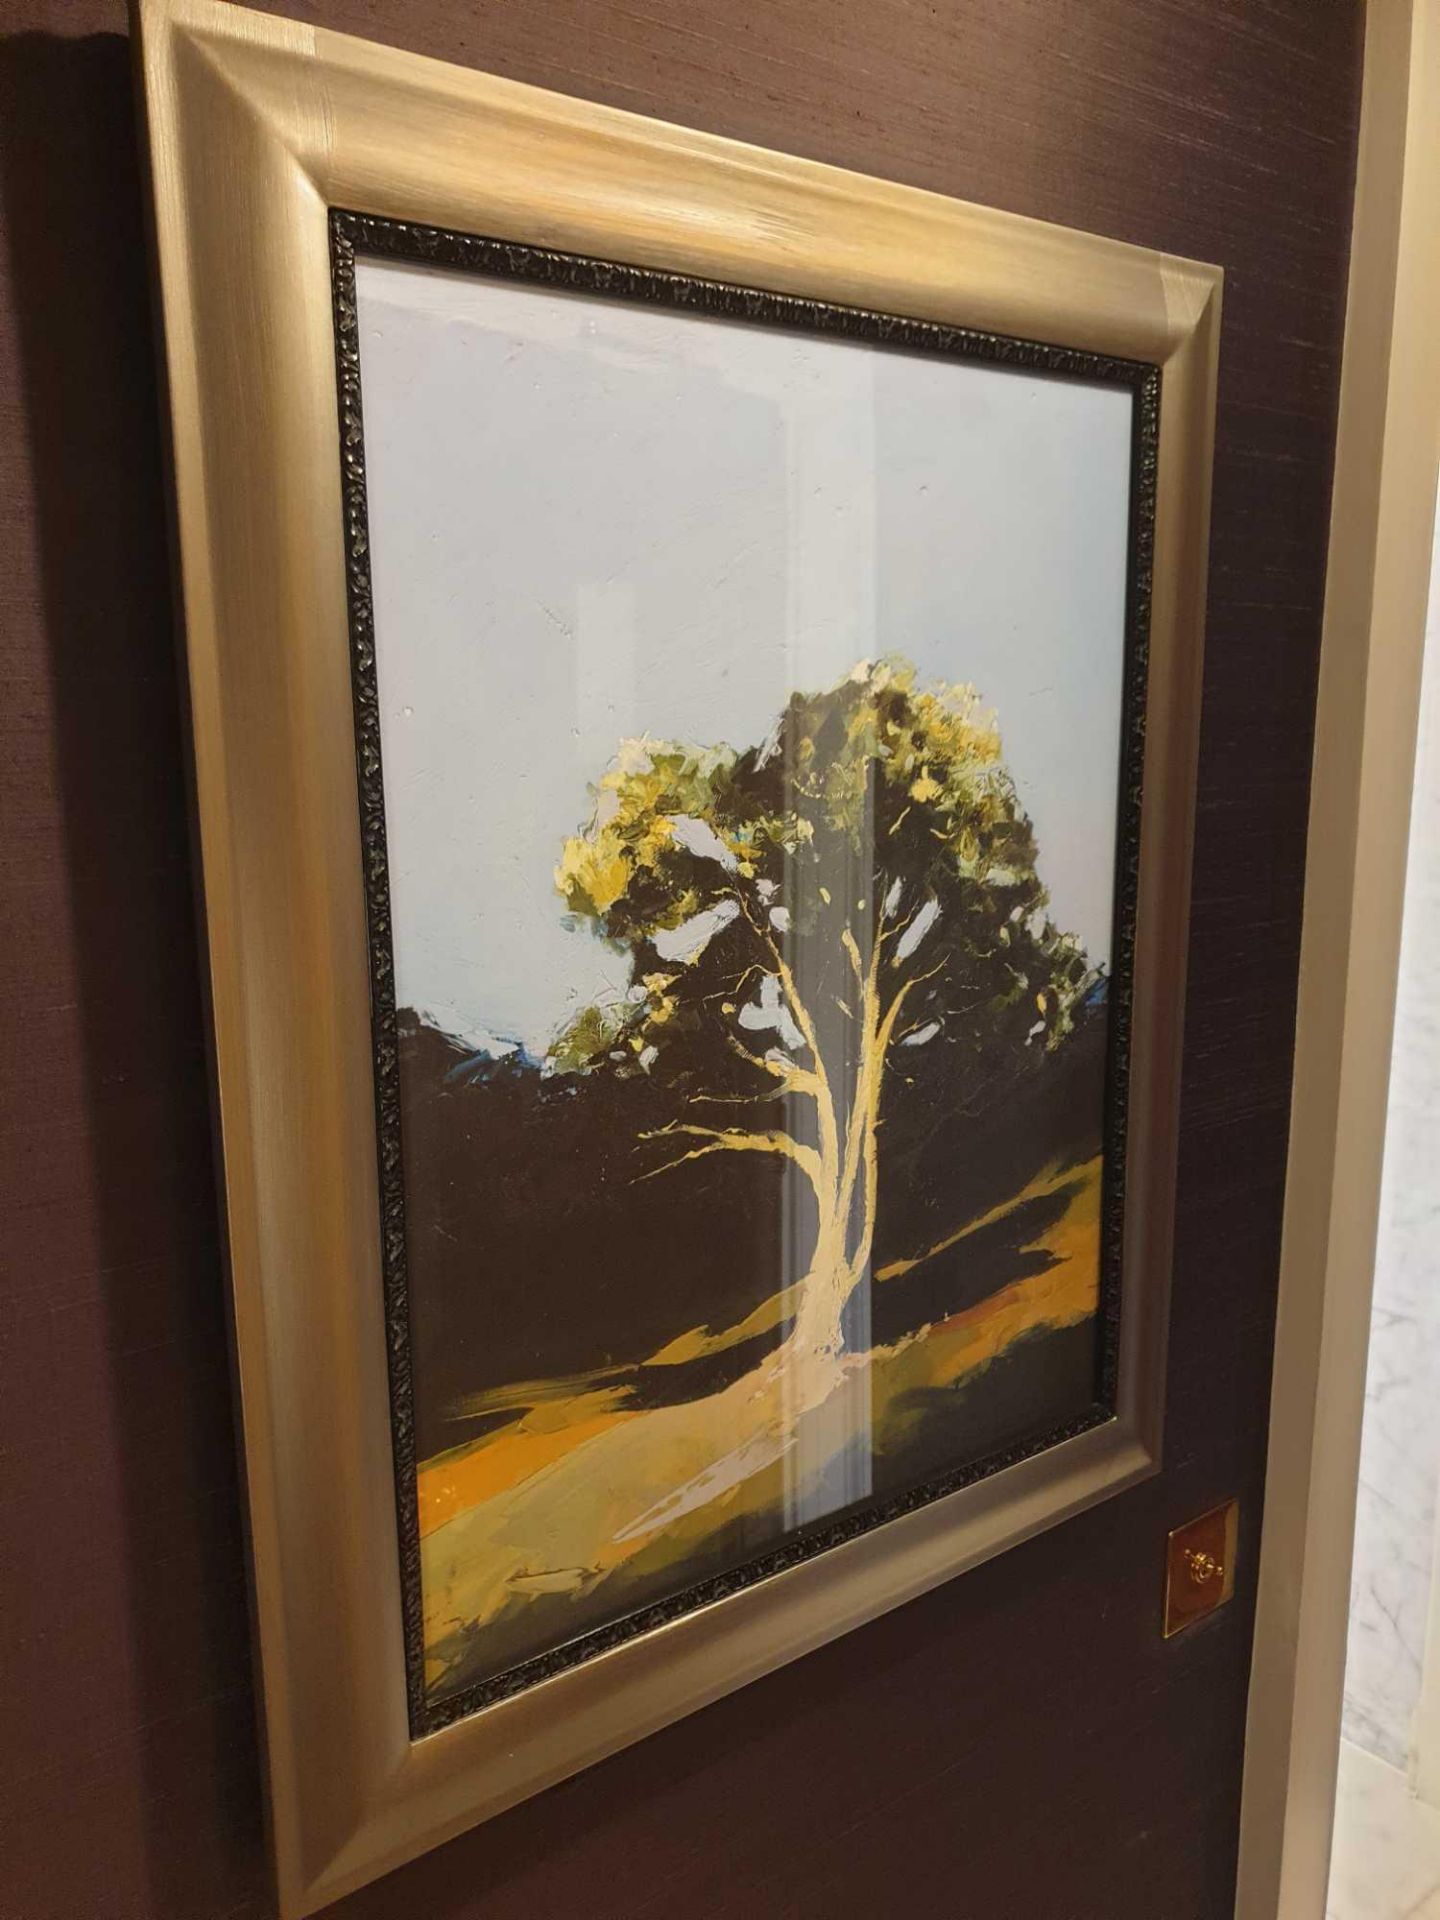 Landscape Lithograph Print Framed Depicting A Tree 62 x 76cm (Room 141)